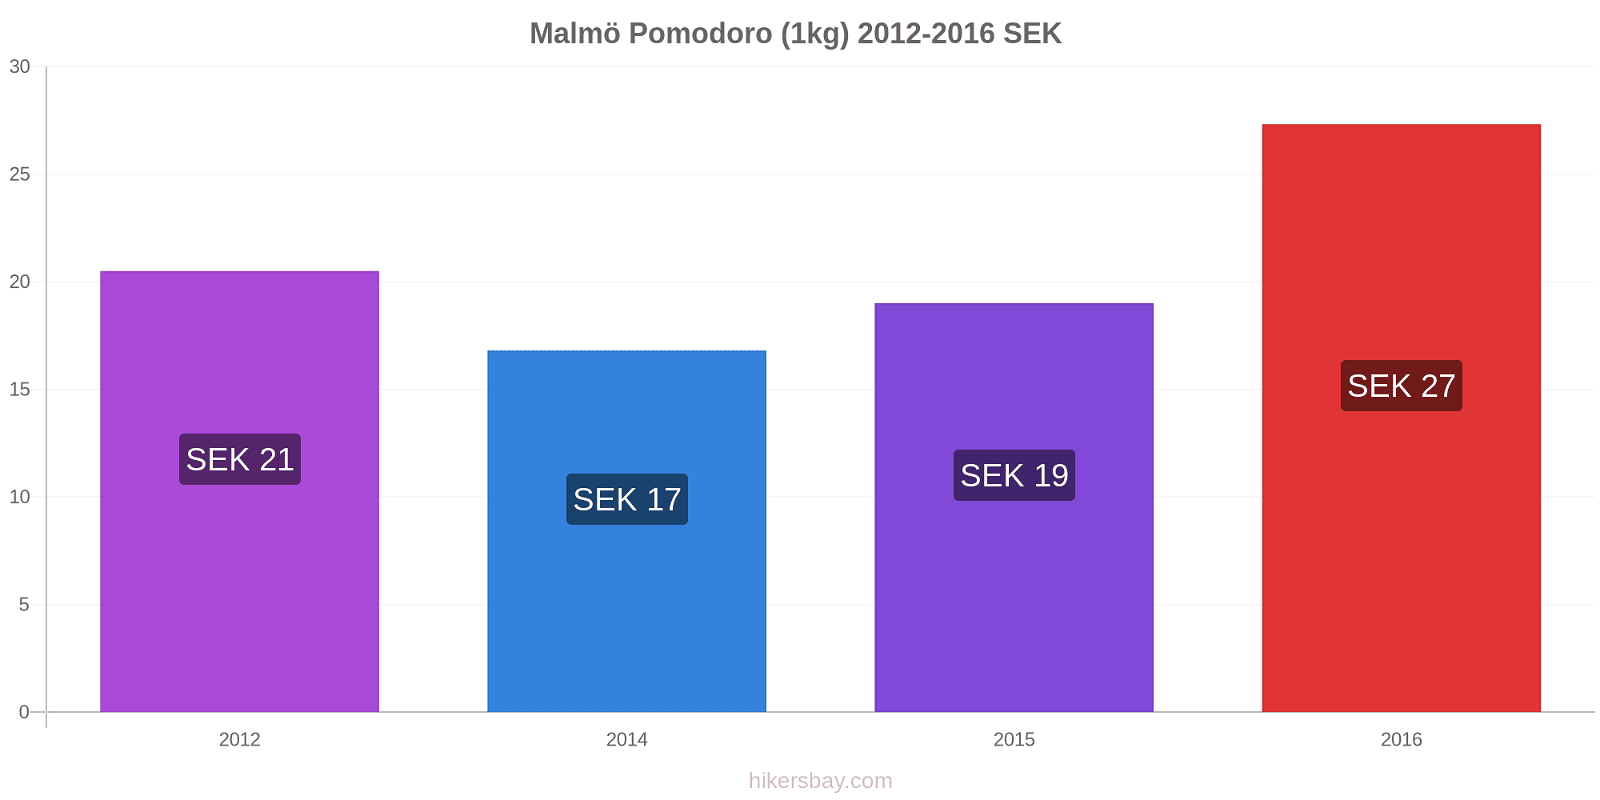 Malmö variazioni di prezzo Pomodoro (1kg) hikersbay.com